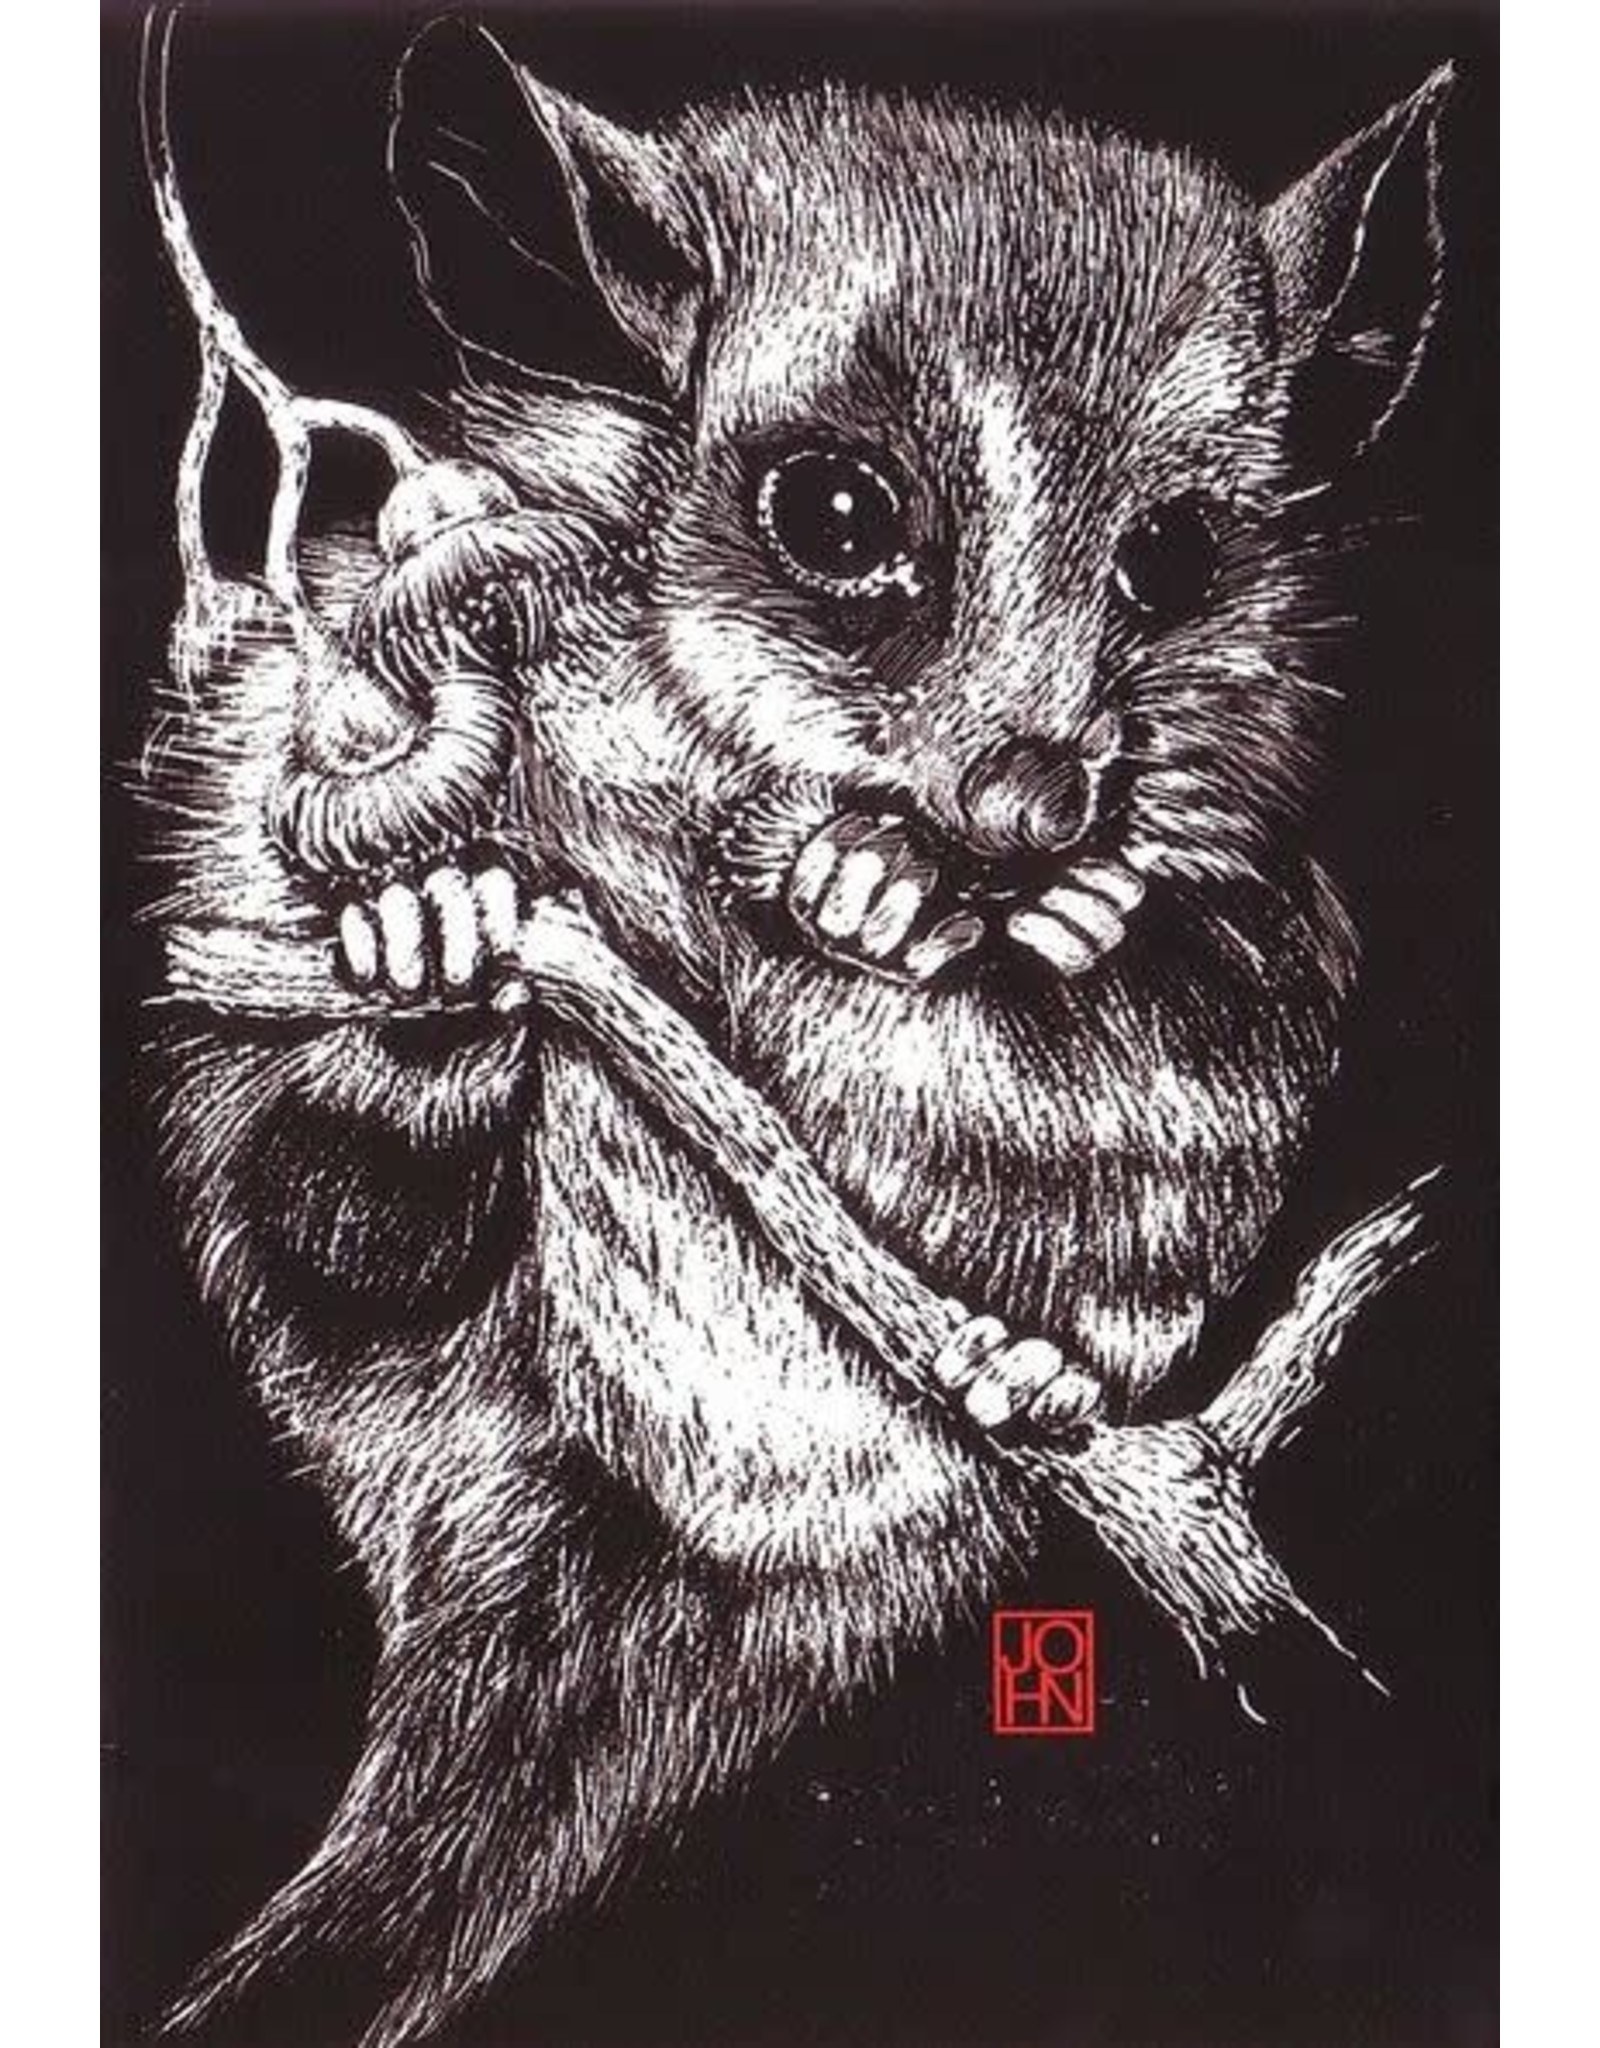 Fauna Cards designed by John Payne